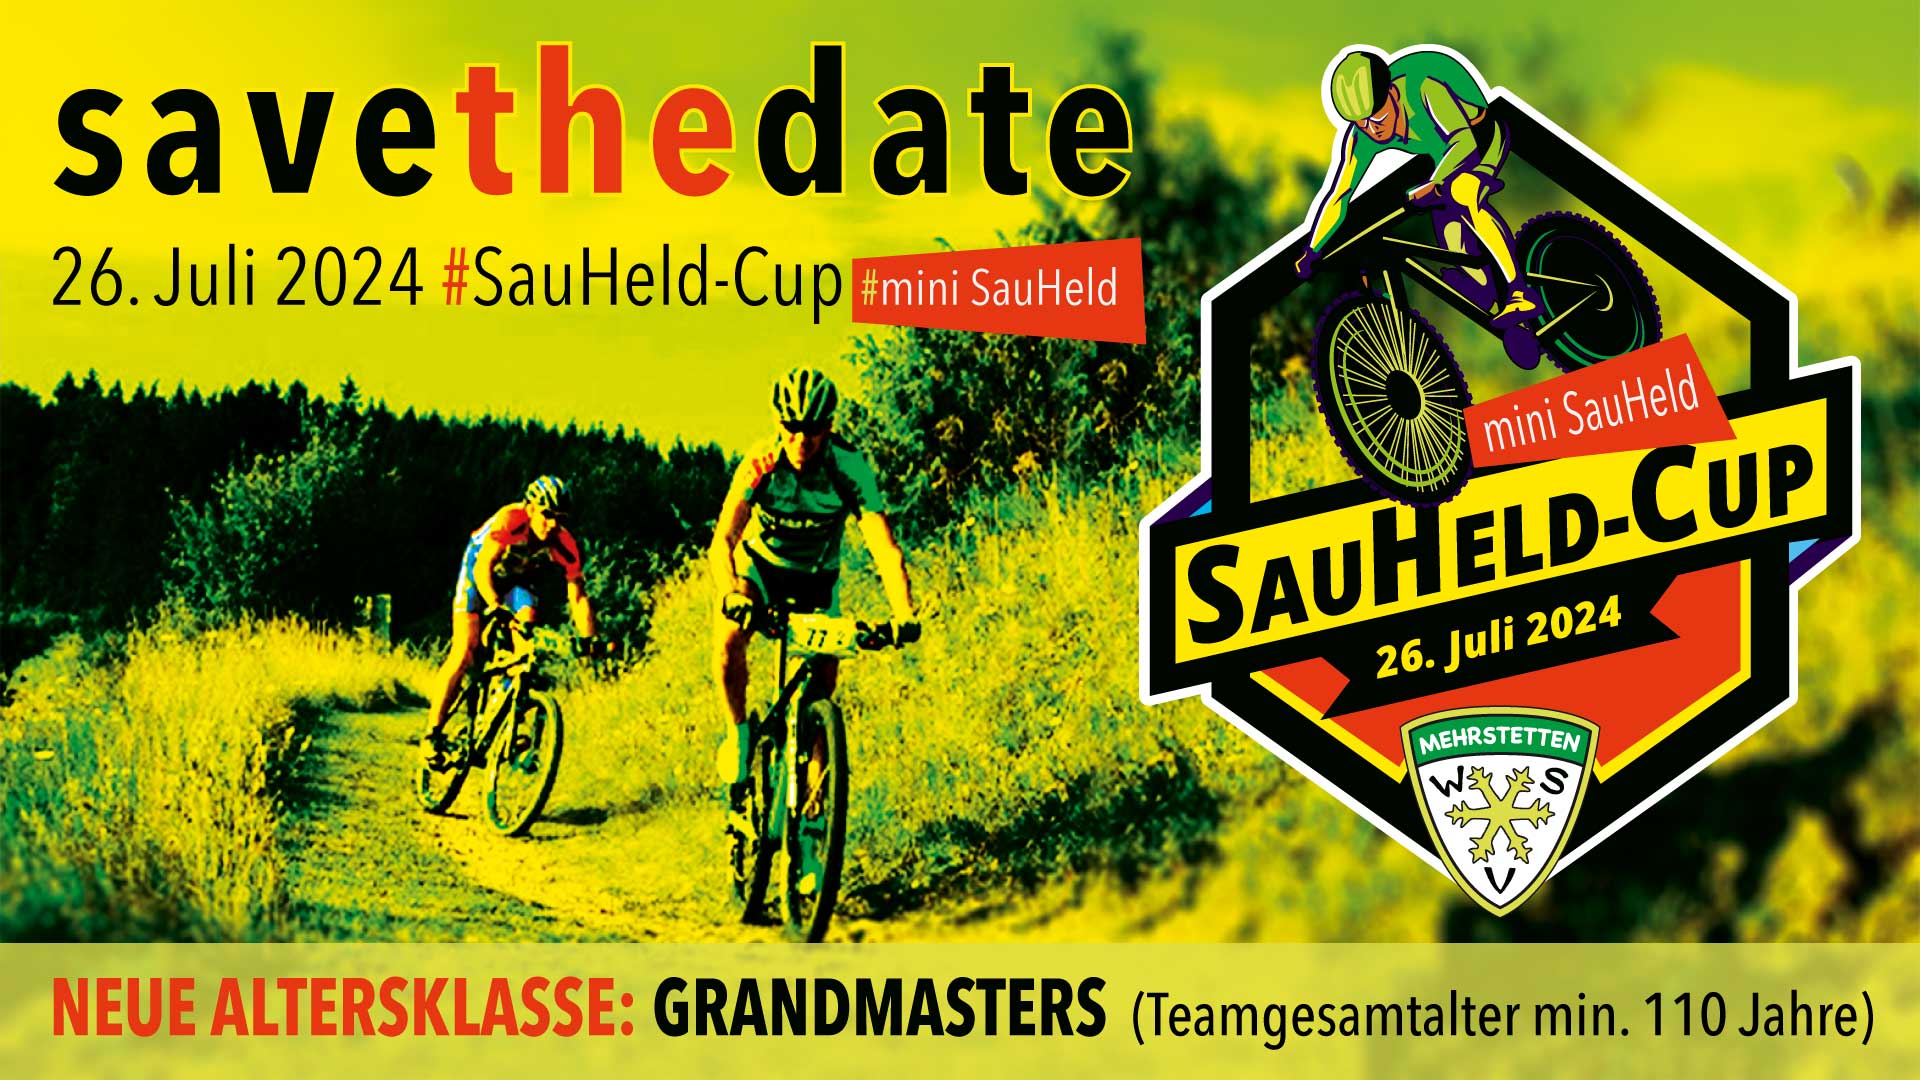 SauHeld-Cup 2024, 26. Juli